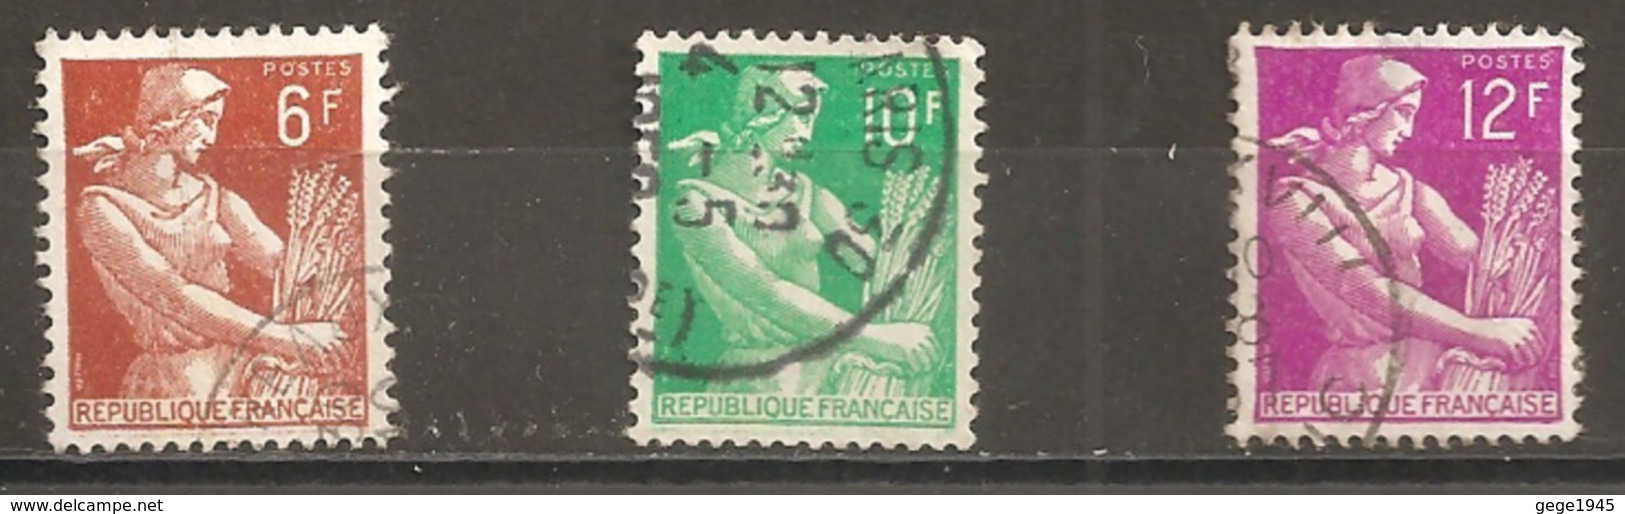 France 1957  Oblitéré   N° 1115  - 1115A  - 1116   -  Type Moissonneuse - 1957-1959 Reaper